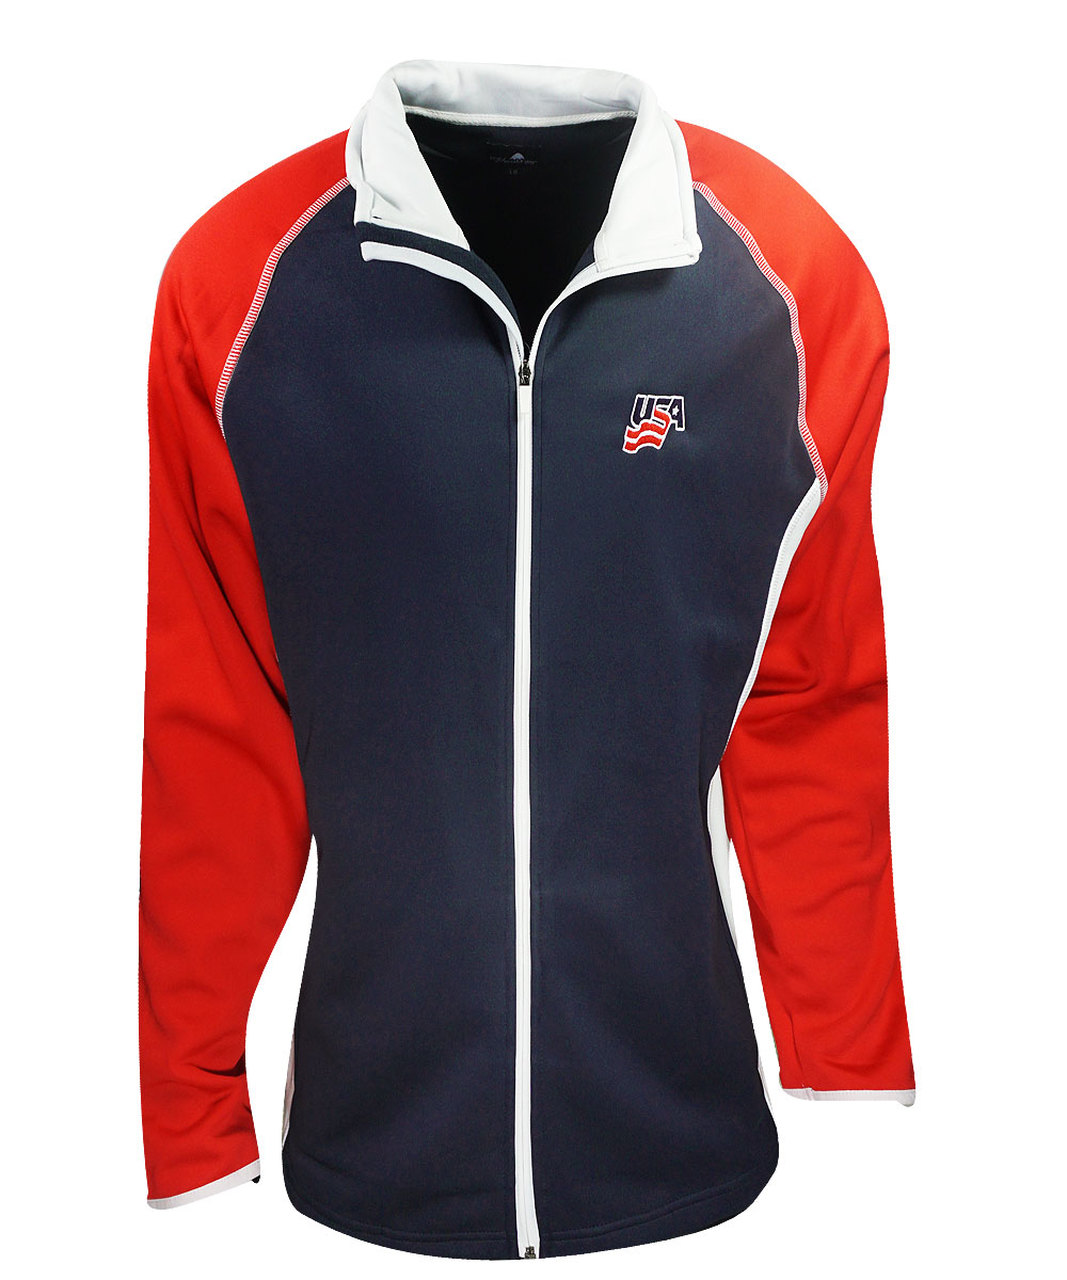 The Weather Company Golf Mens Poly-Flex USA Jacket